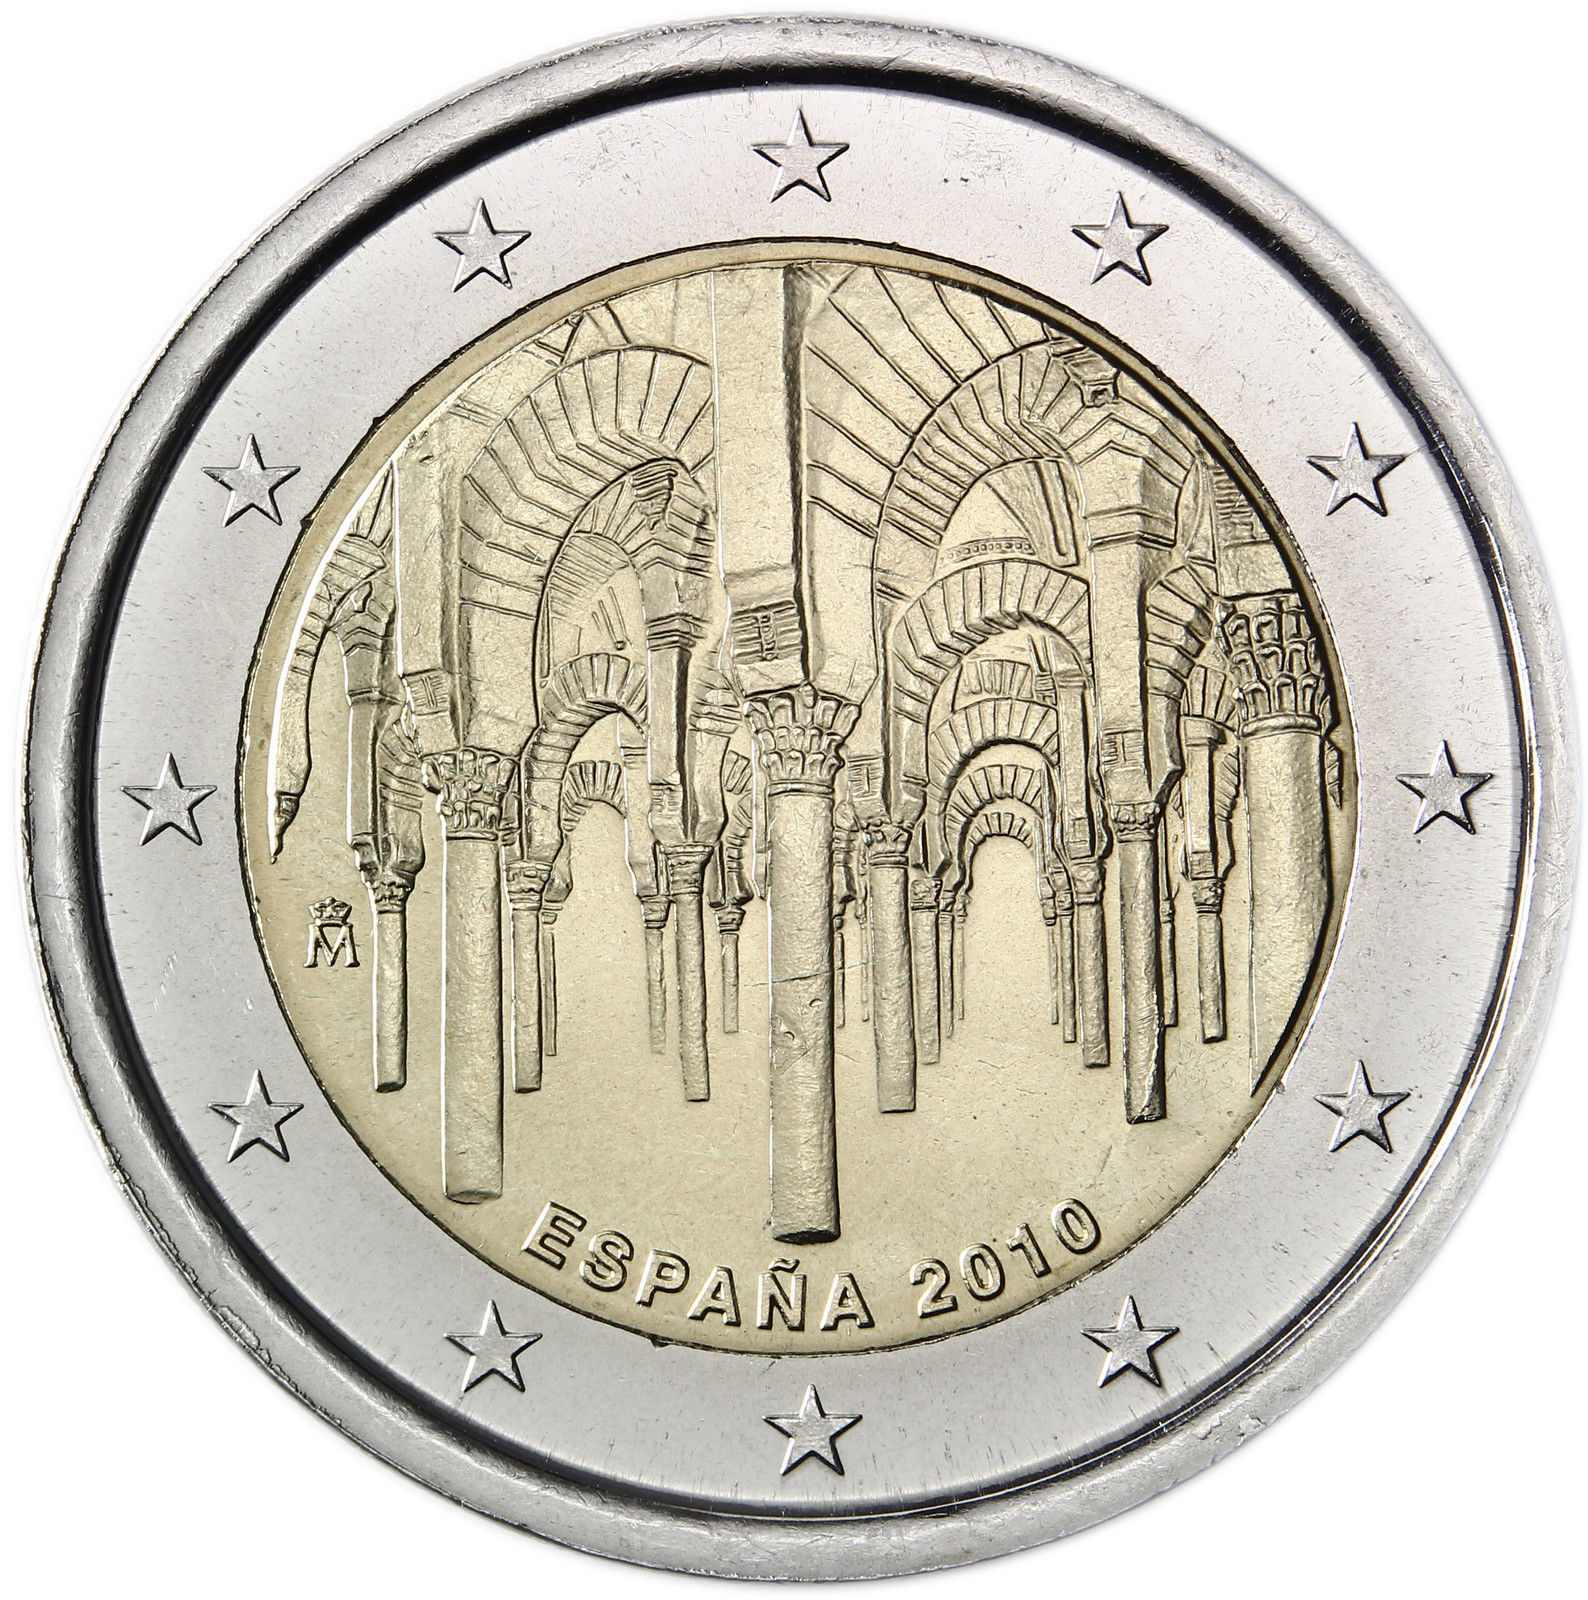 Spain 2 euro 2010 - Historic Centre of Cordoba [eur15635]